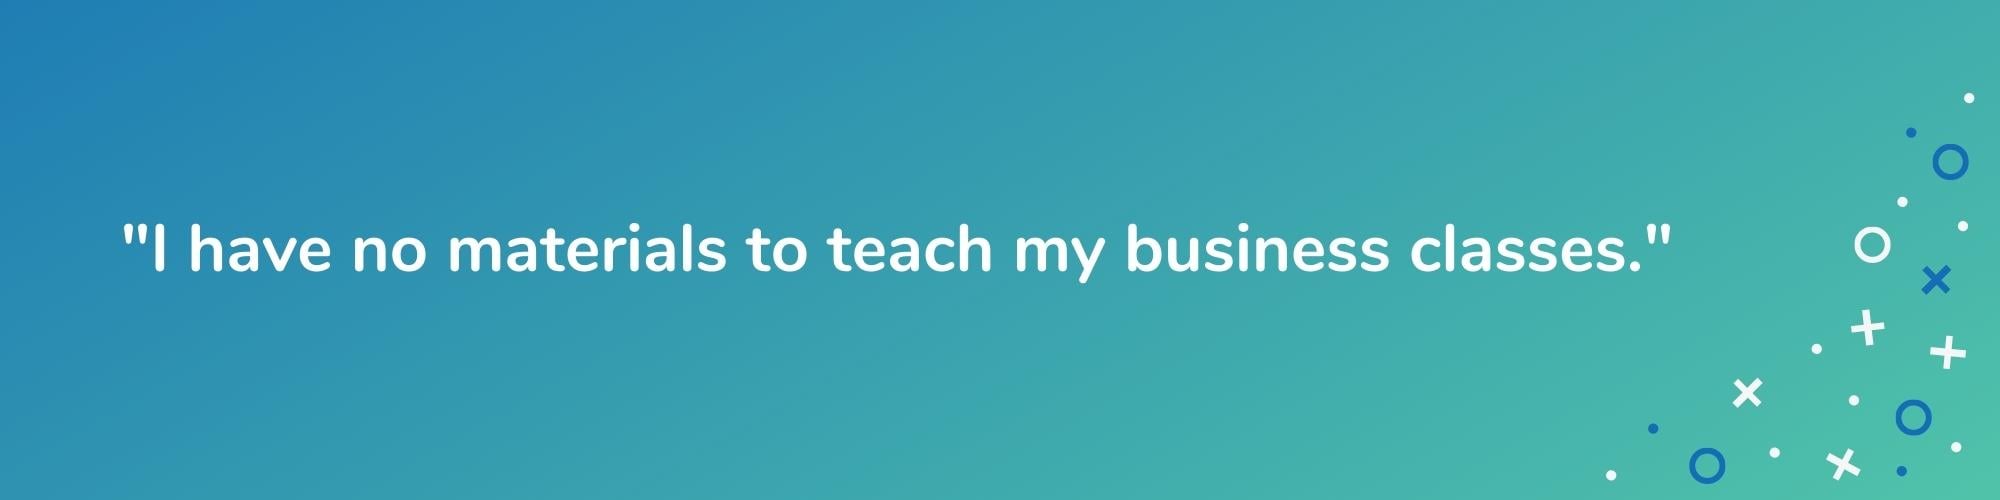 business-education-lesson-plans-no-materials